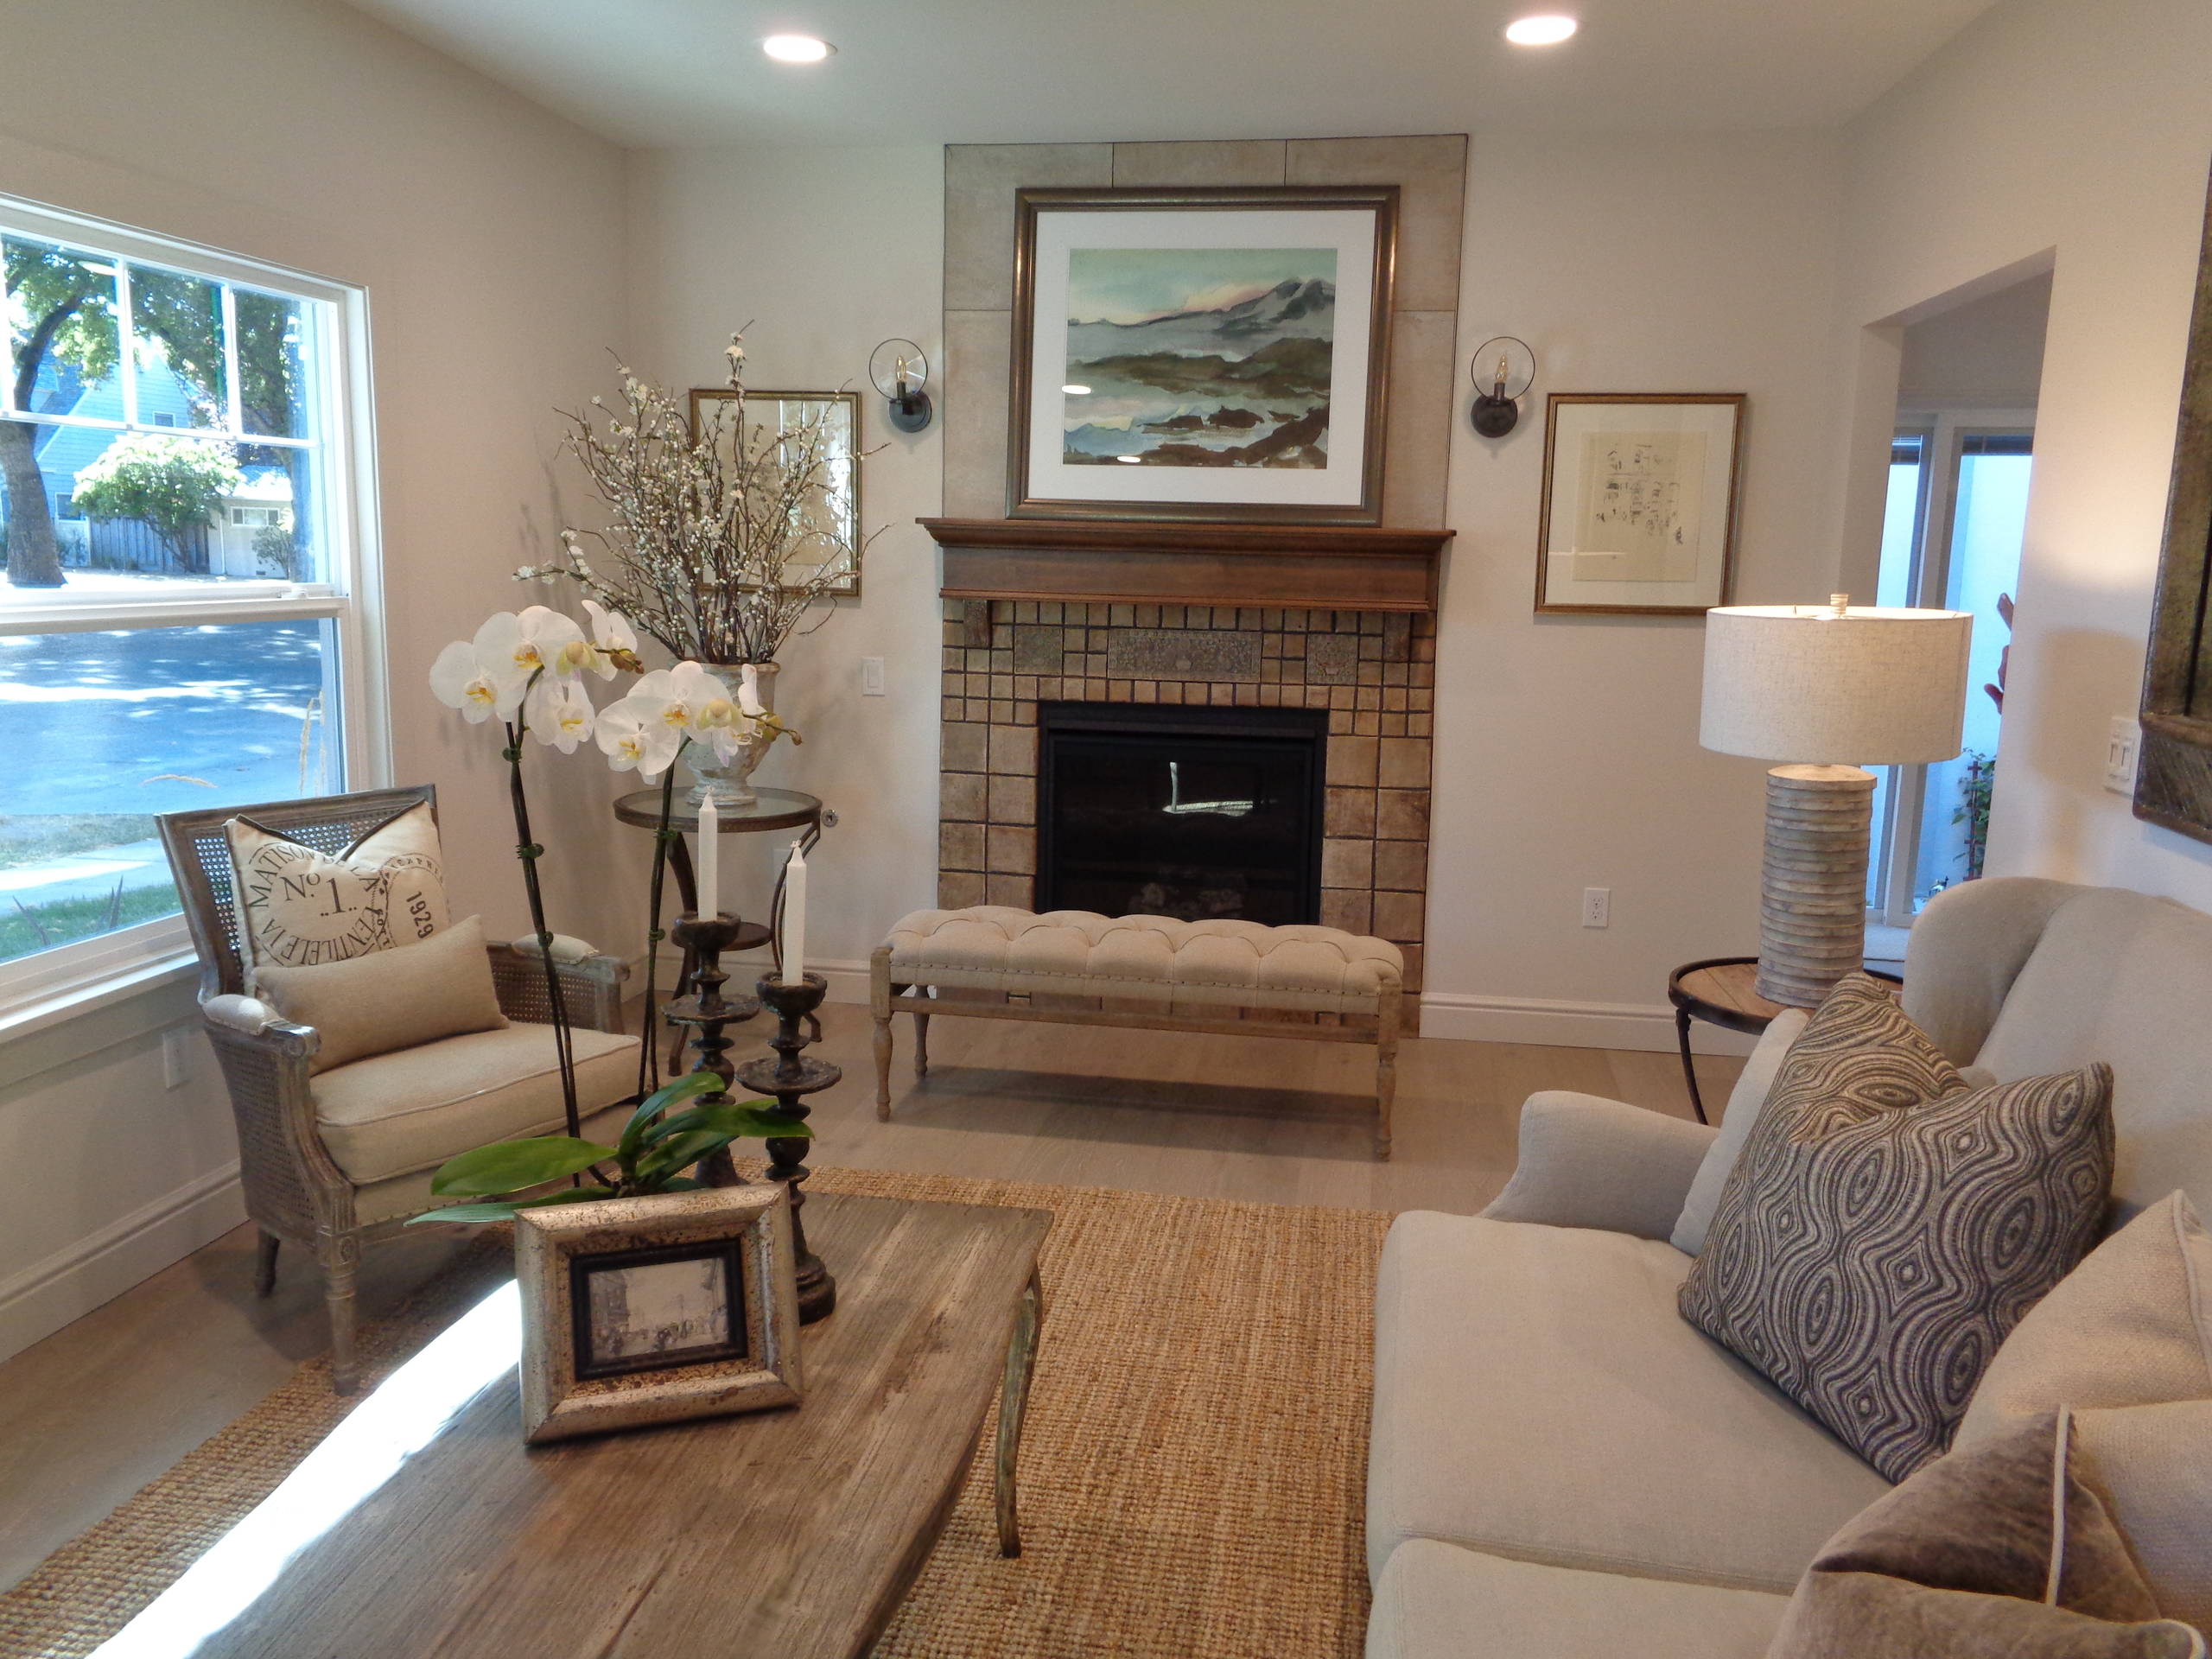 Cozy living room with original Batchelder fireplace tile